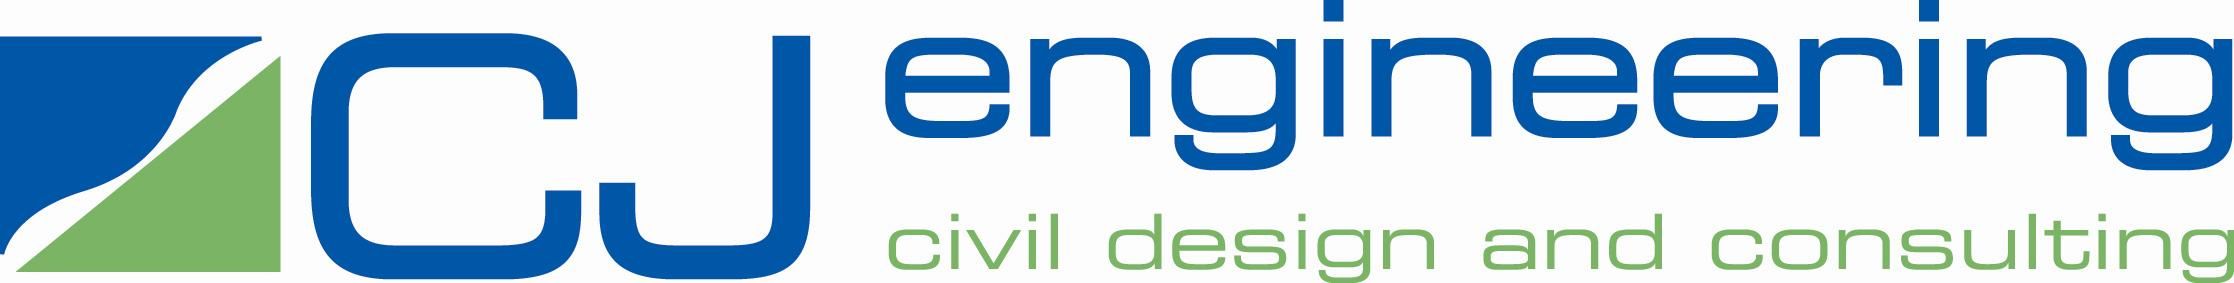 CJ Engineering - Civil Design and Consulting logo